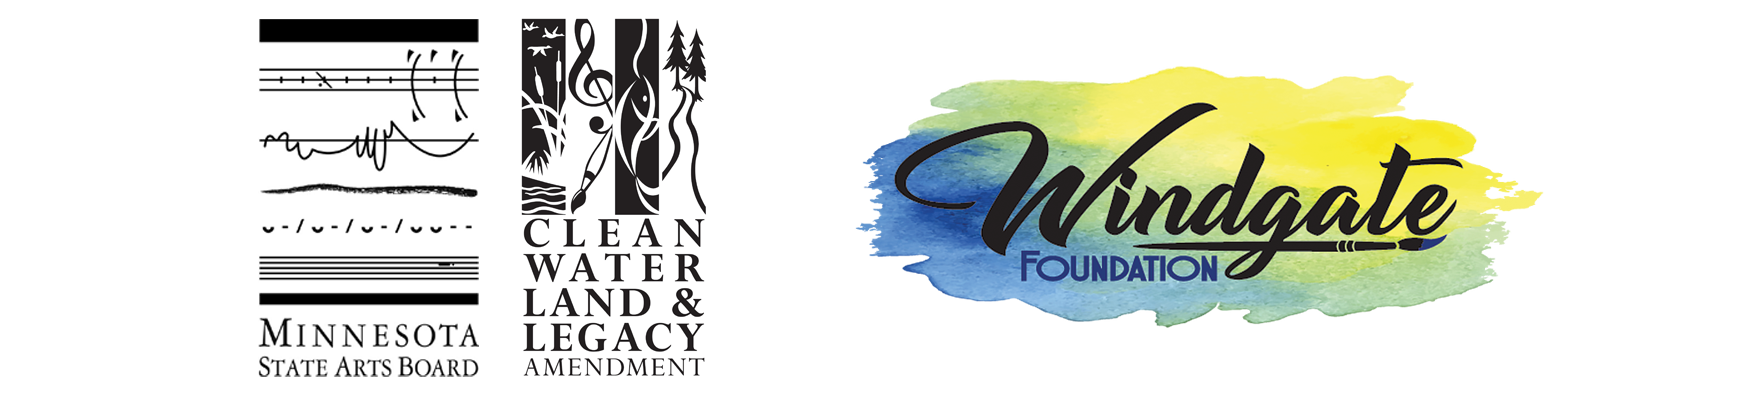 Windgate Foundation logo and Minnesota State Arts Board logo and Minnesota Legacy logo